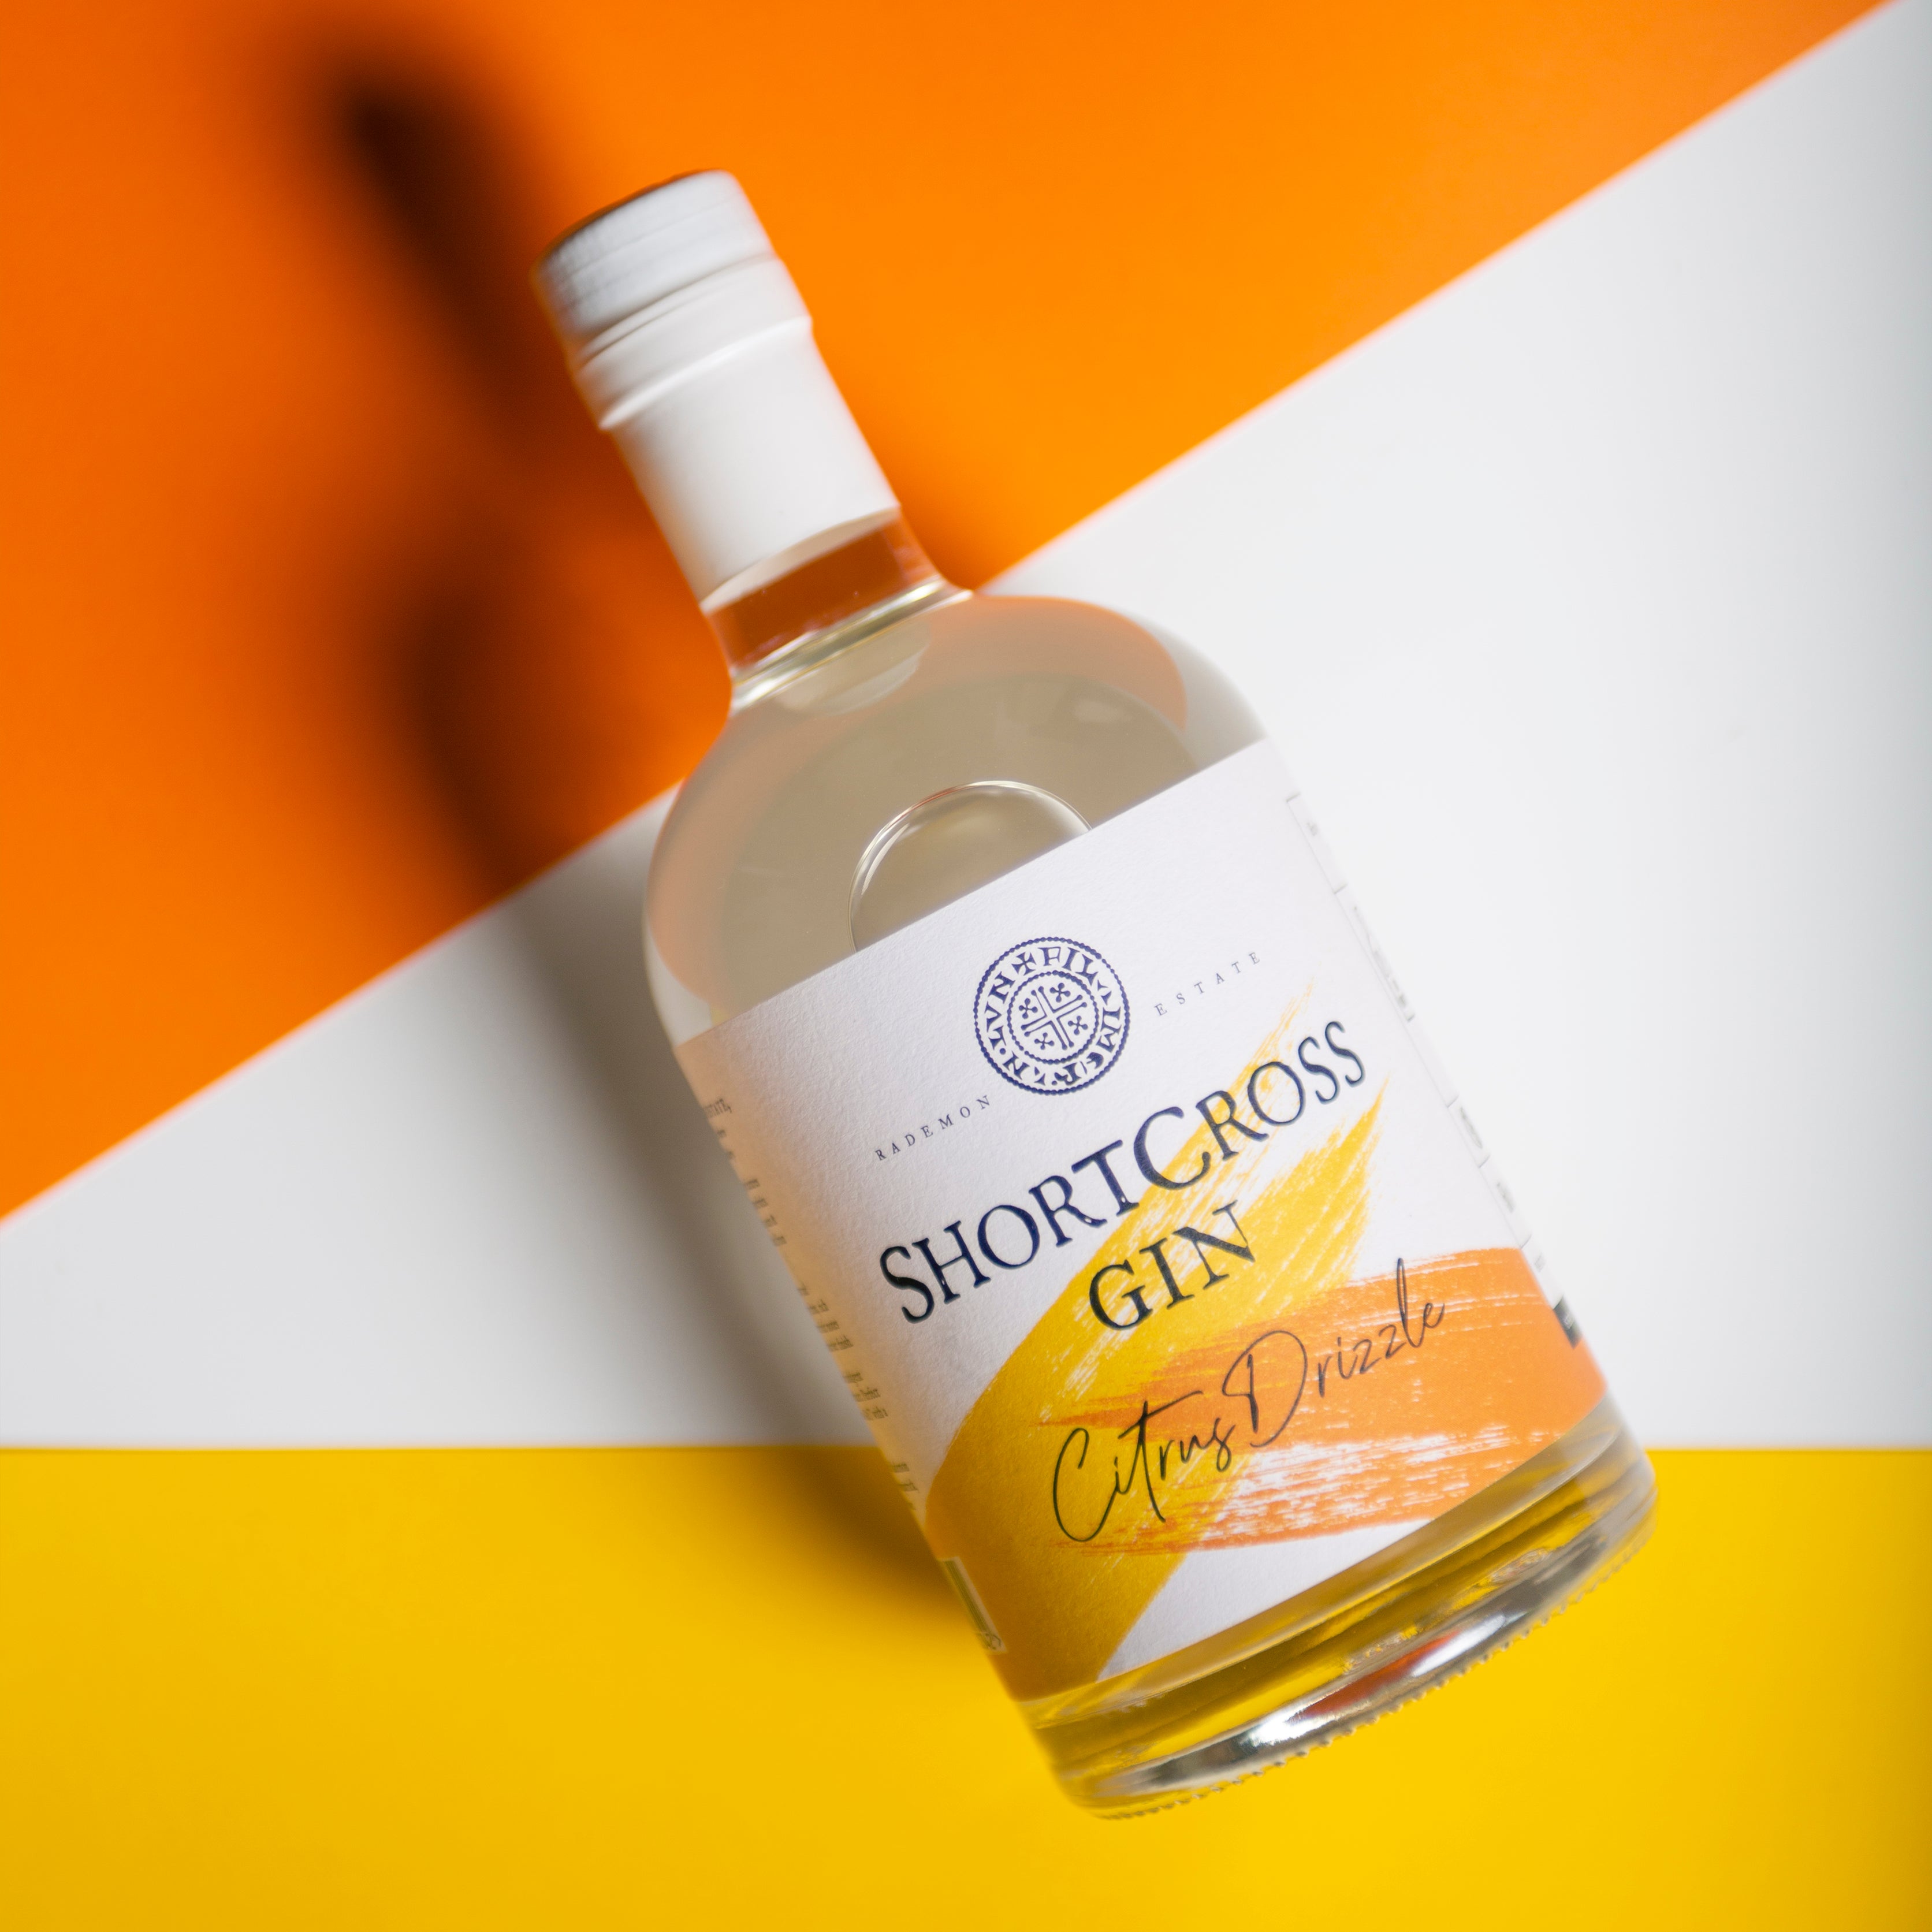 Shortcross Citrus Drizzle Gin (50cl) 43% ABV